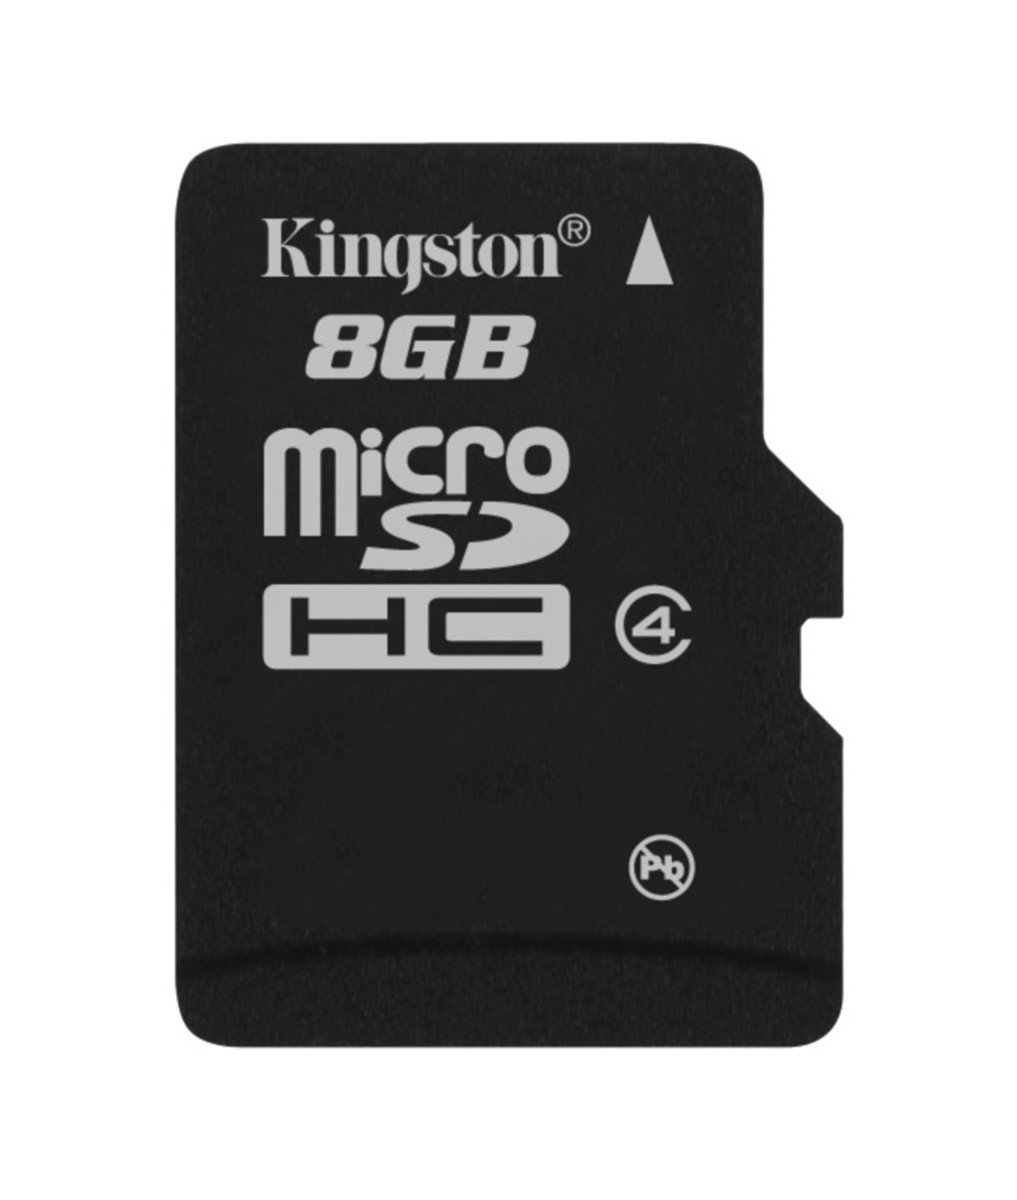 8GB microSDHC Class 4 wo Adapter